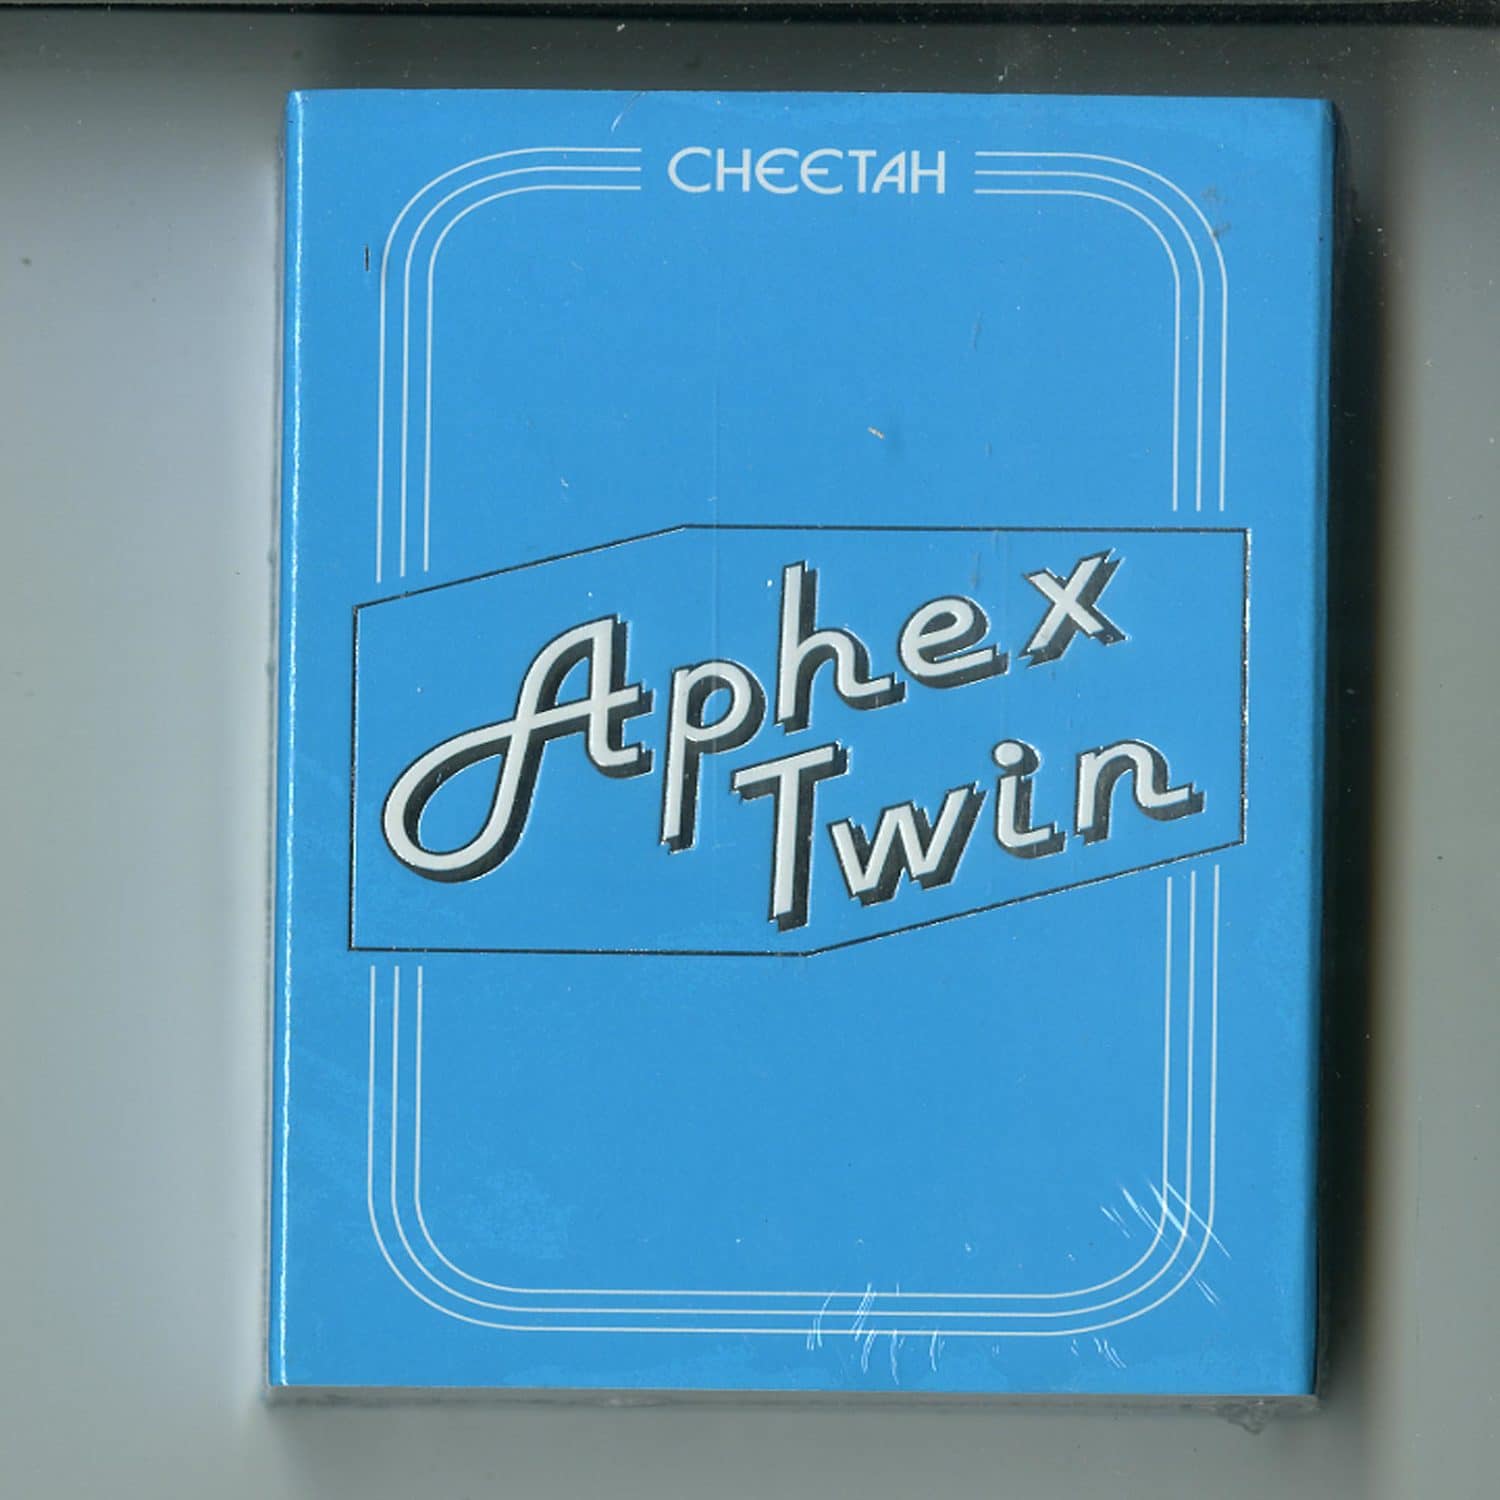 Aphex Twin - CHEETAH EP 